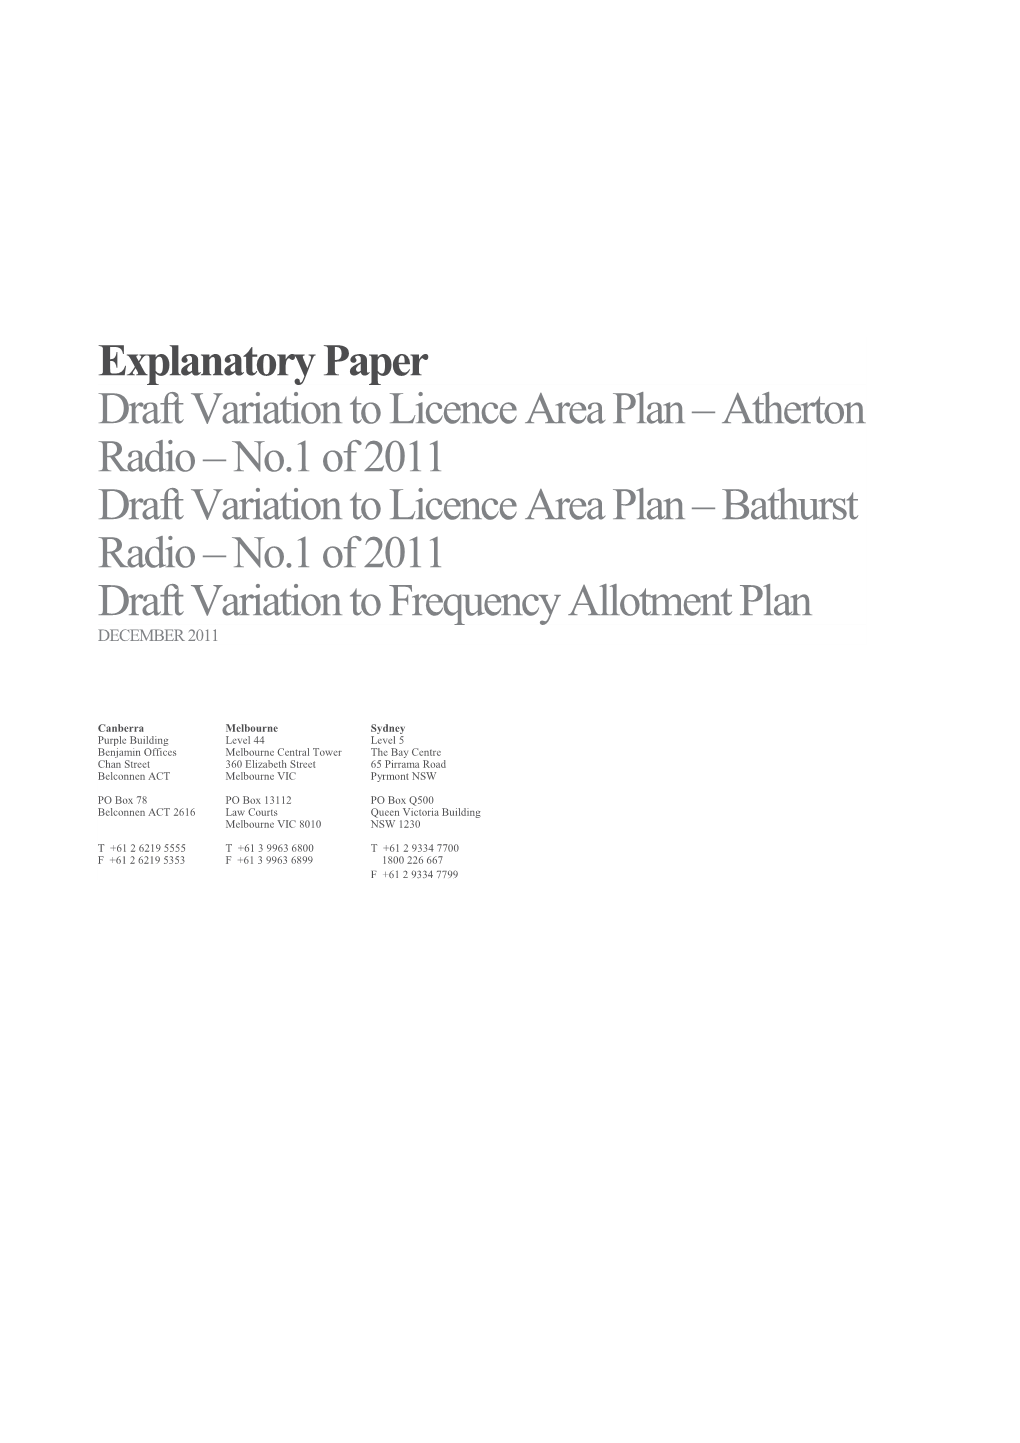 EP to Draft Variation to LAP - Atherton & Bathurst Radios - No. 1 of 2011 & Draft Variation